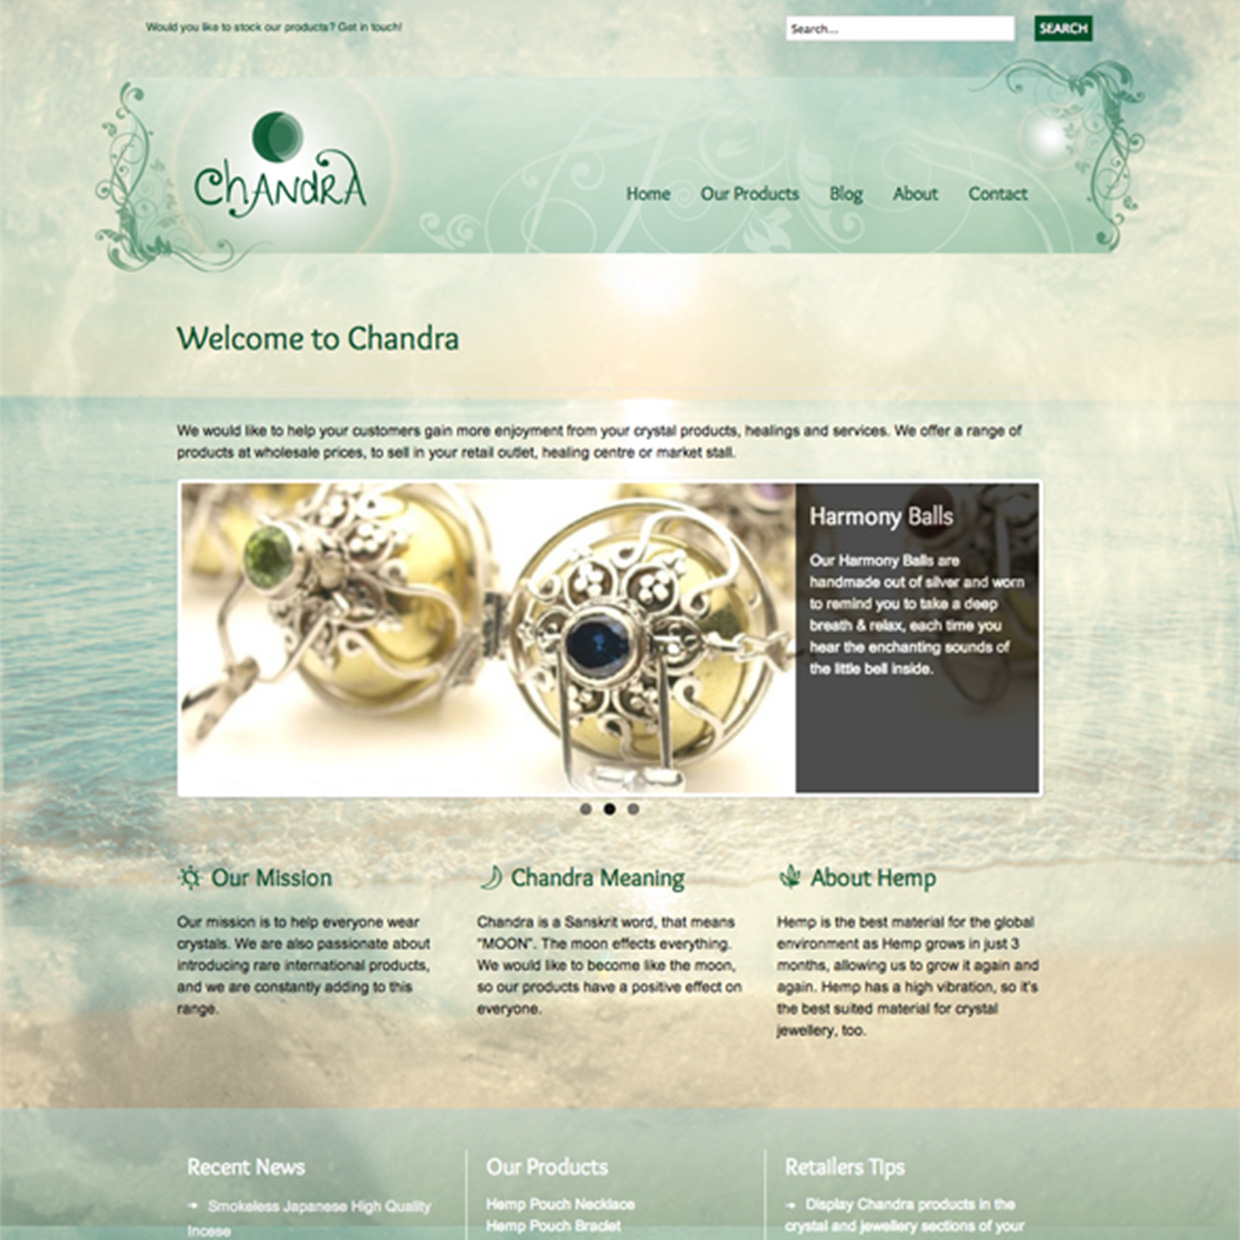 Chandra website design by Frances Verbeek